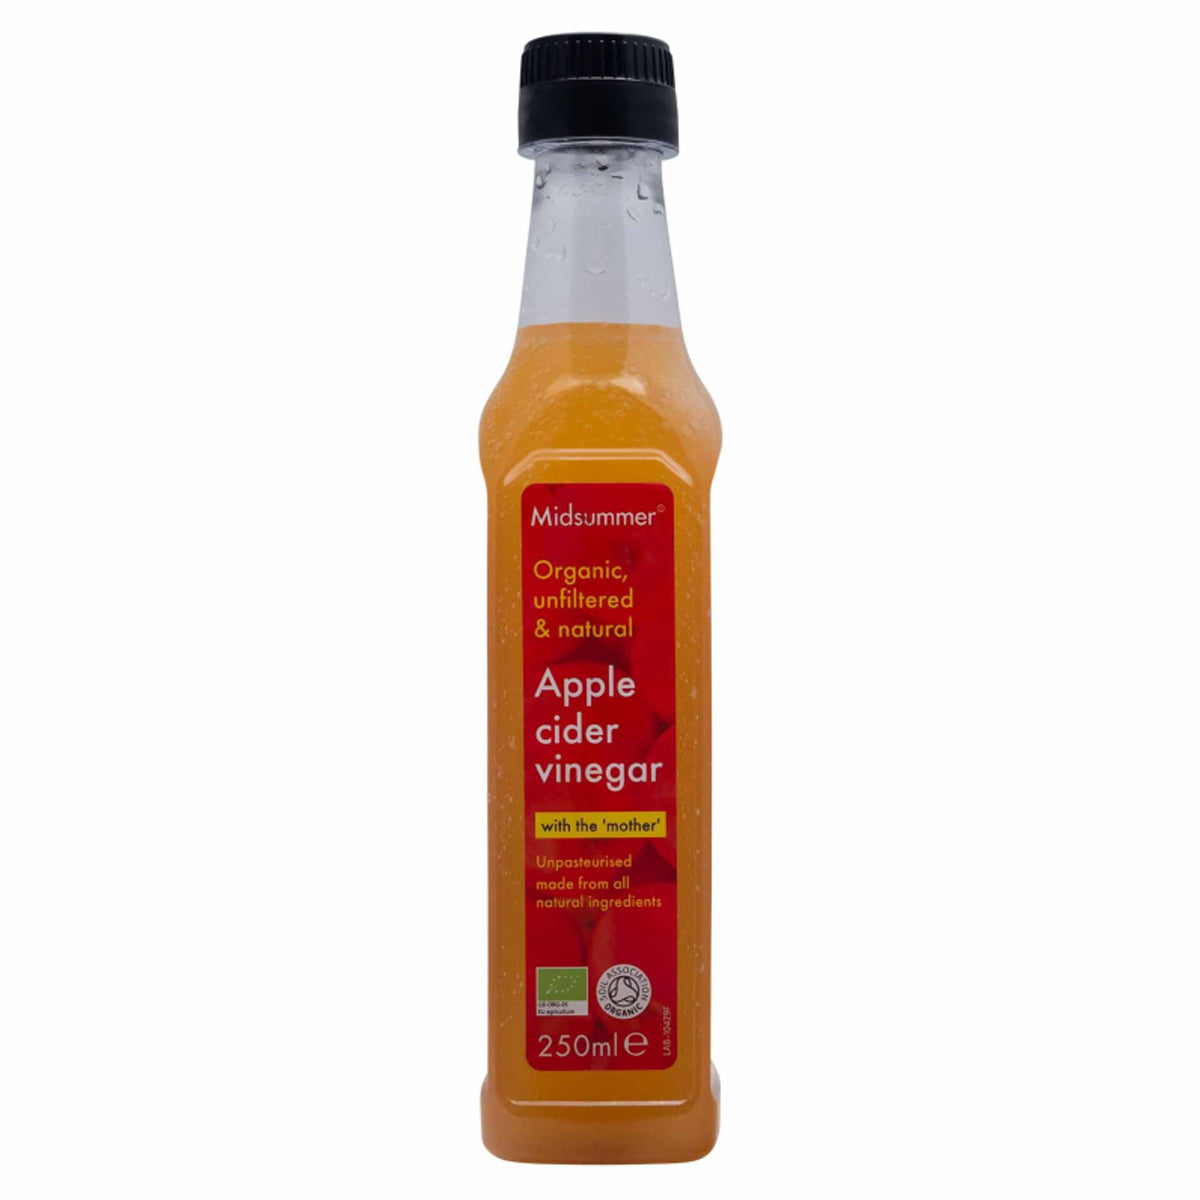 A bottle of Midsummer - Organic Apple Cider Vinegar - 250ml on a white background.